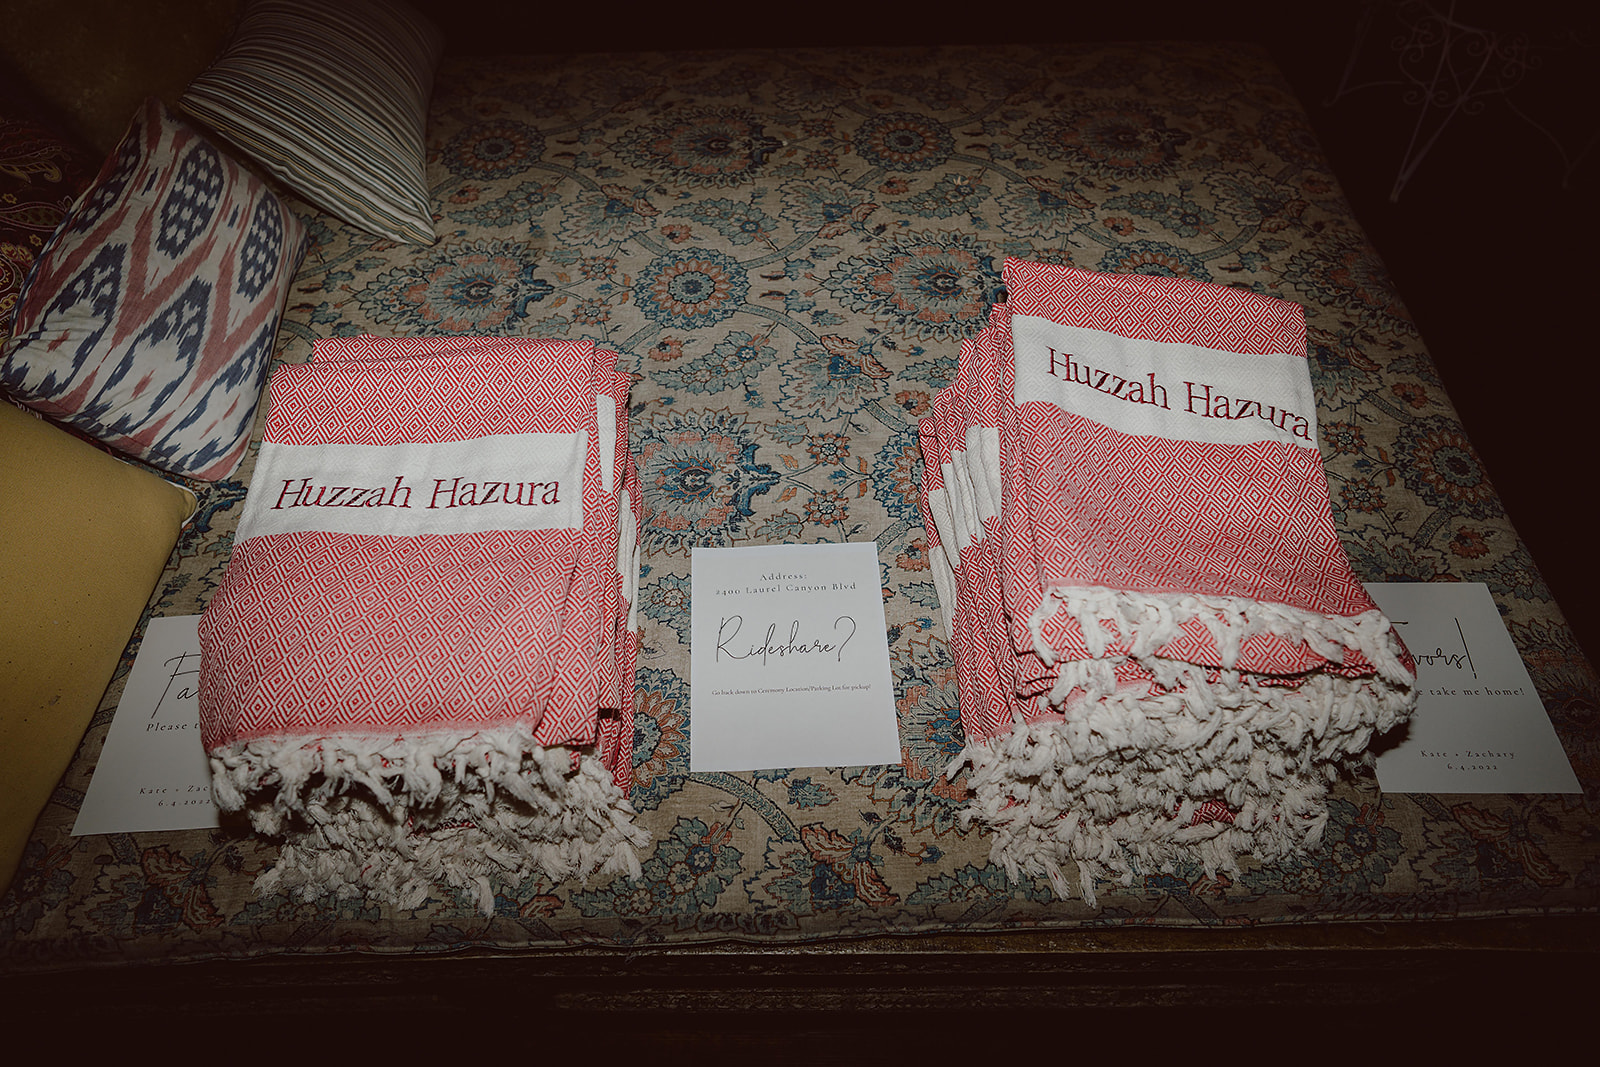 guest favor blankets that read Huzzah Hazura